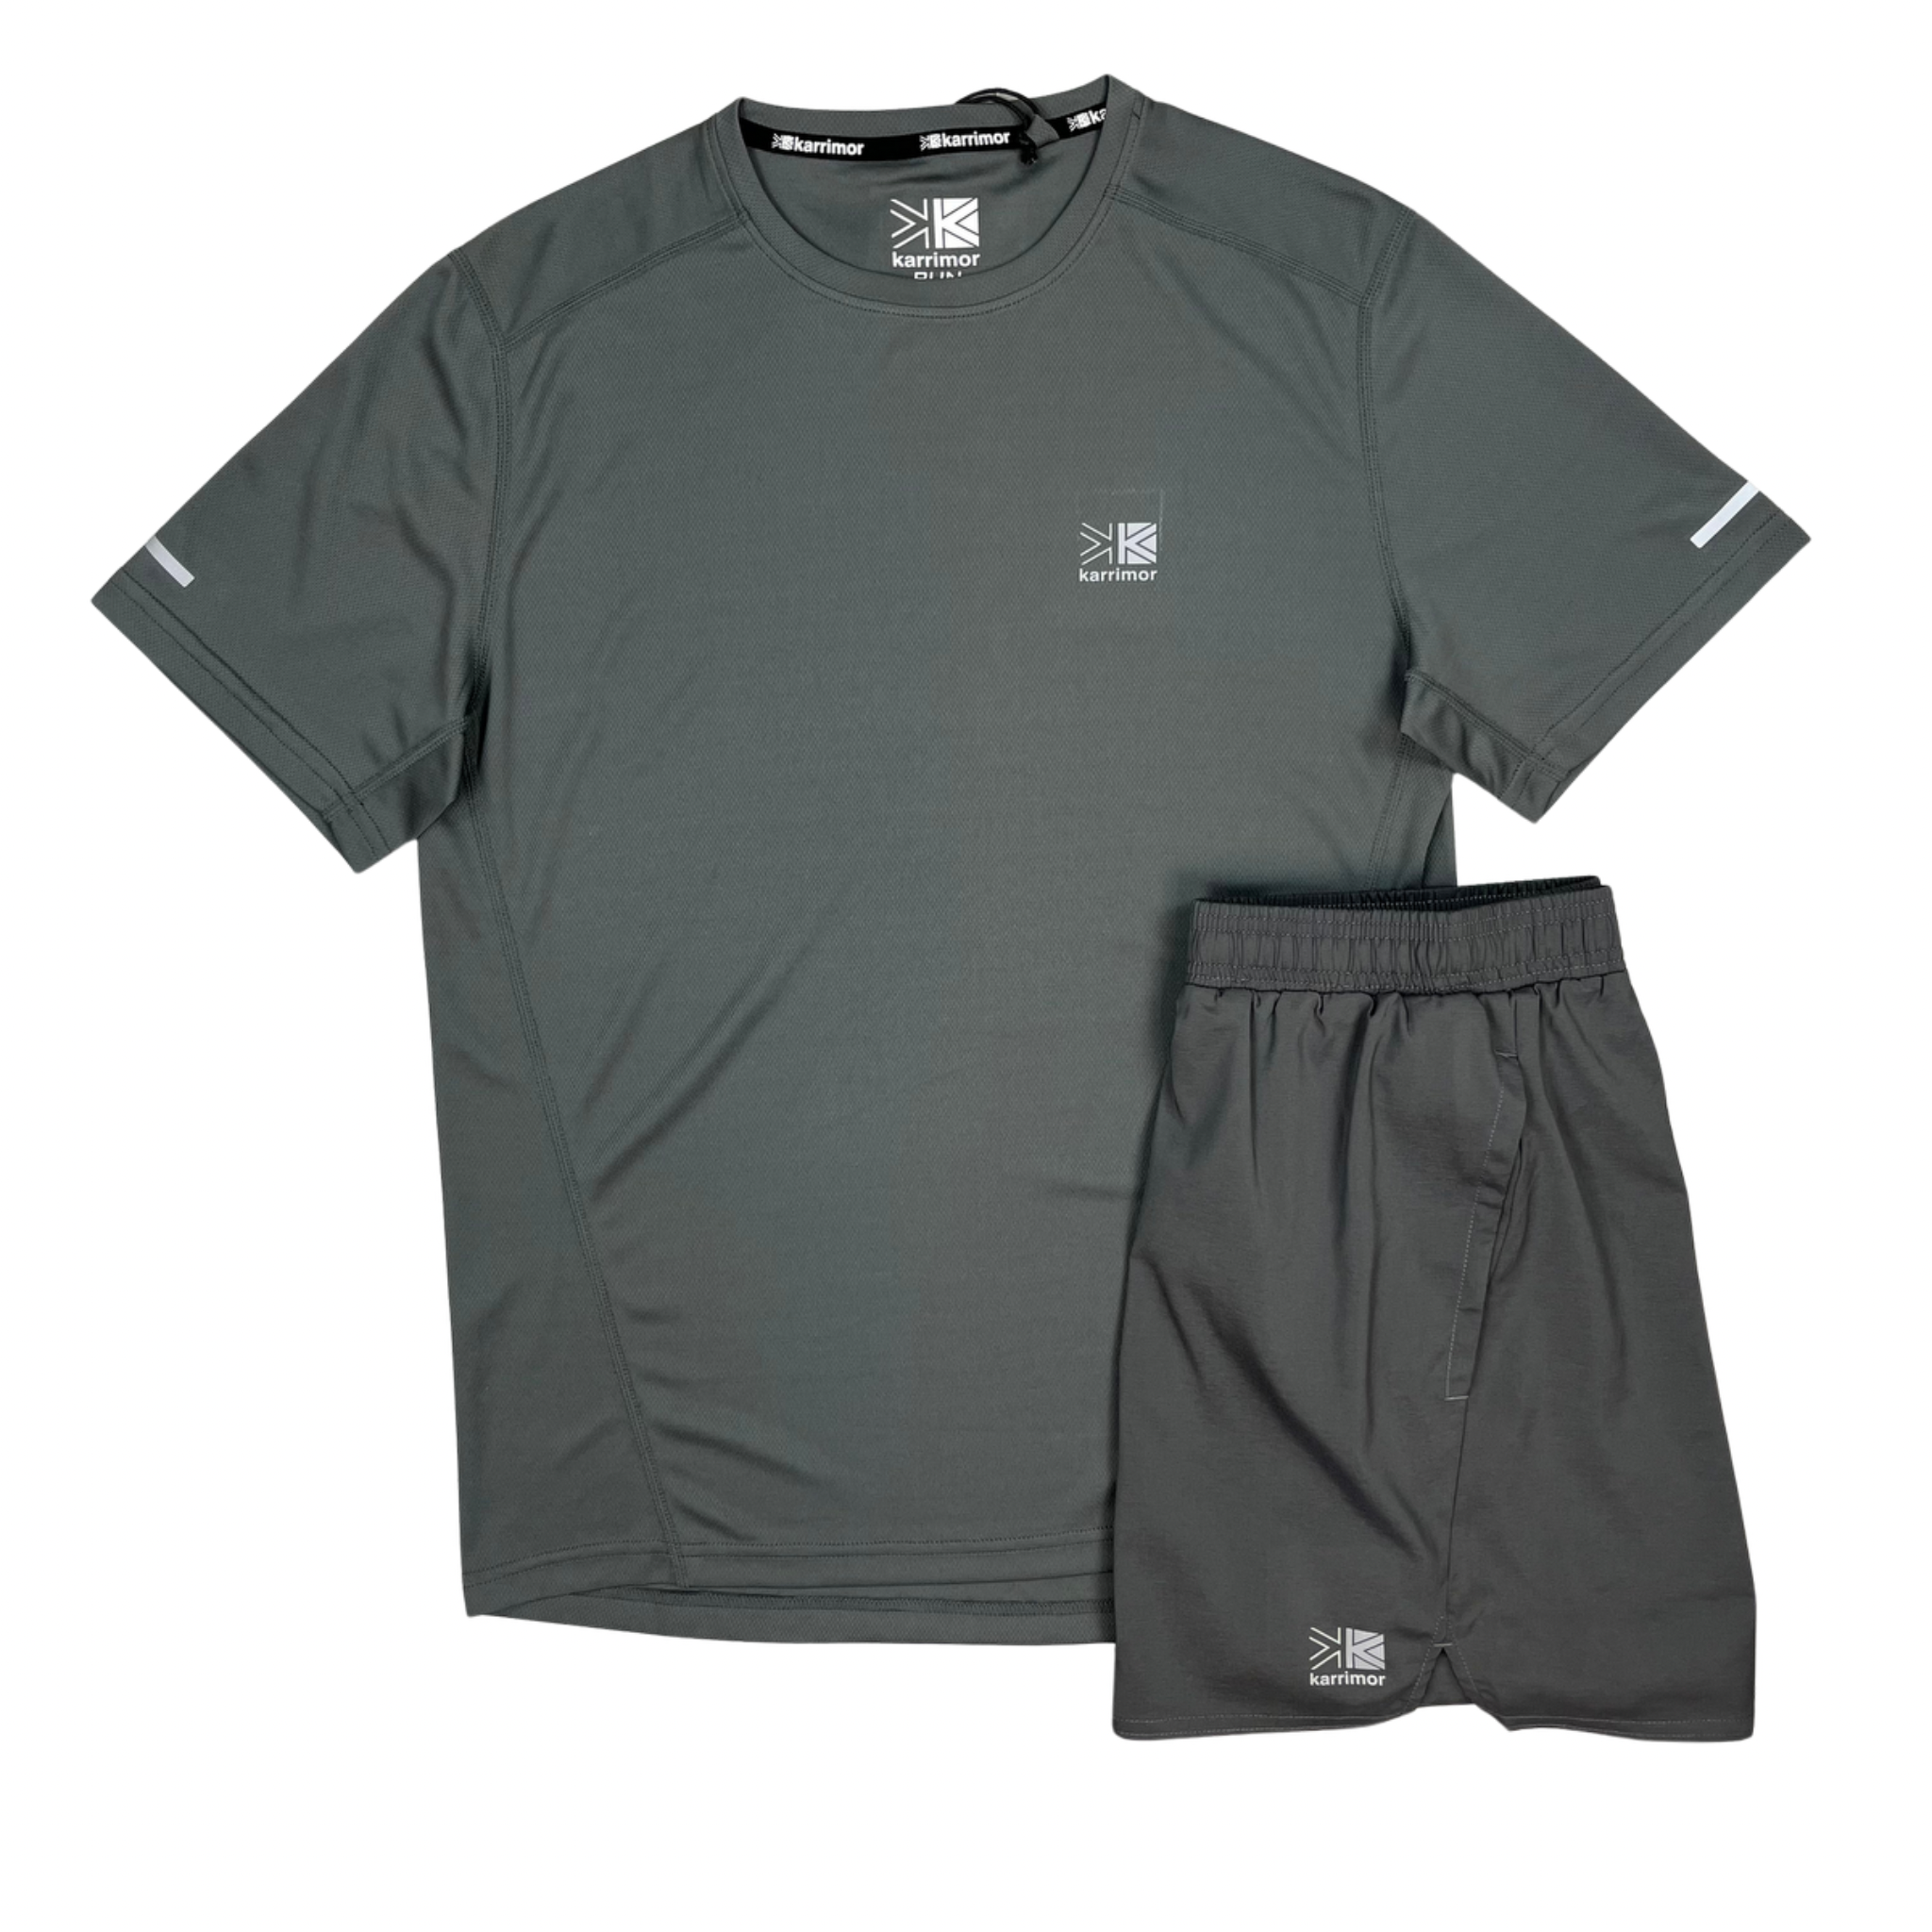 Karrimor Run T-Shirt / Shorts Set - Charcoal